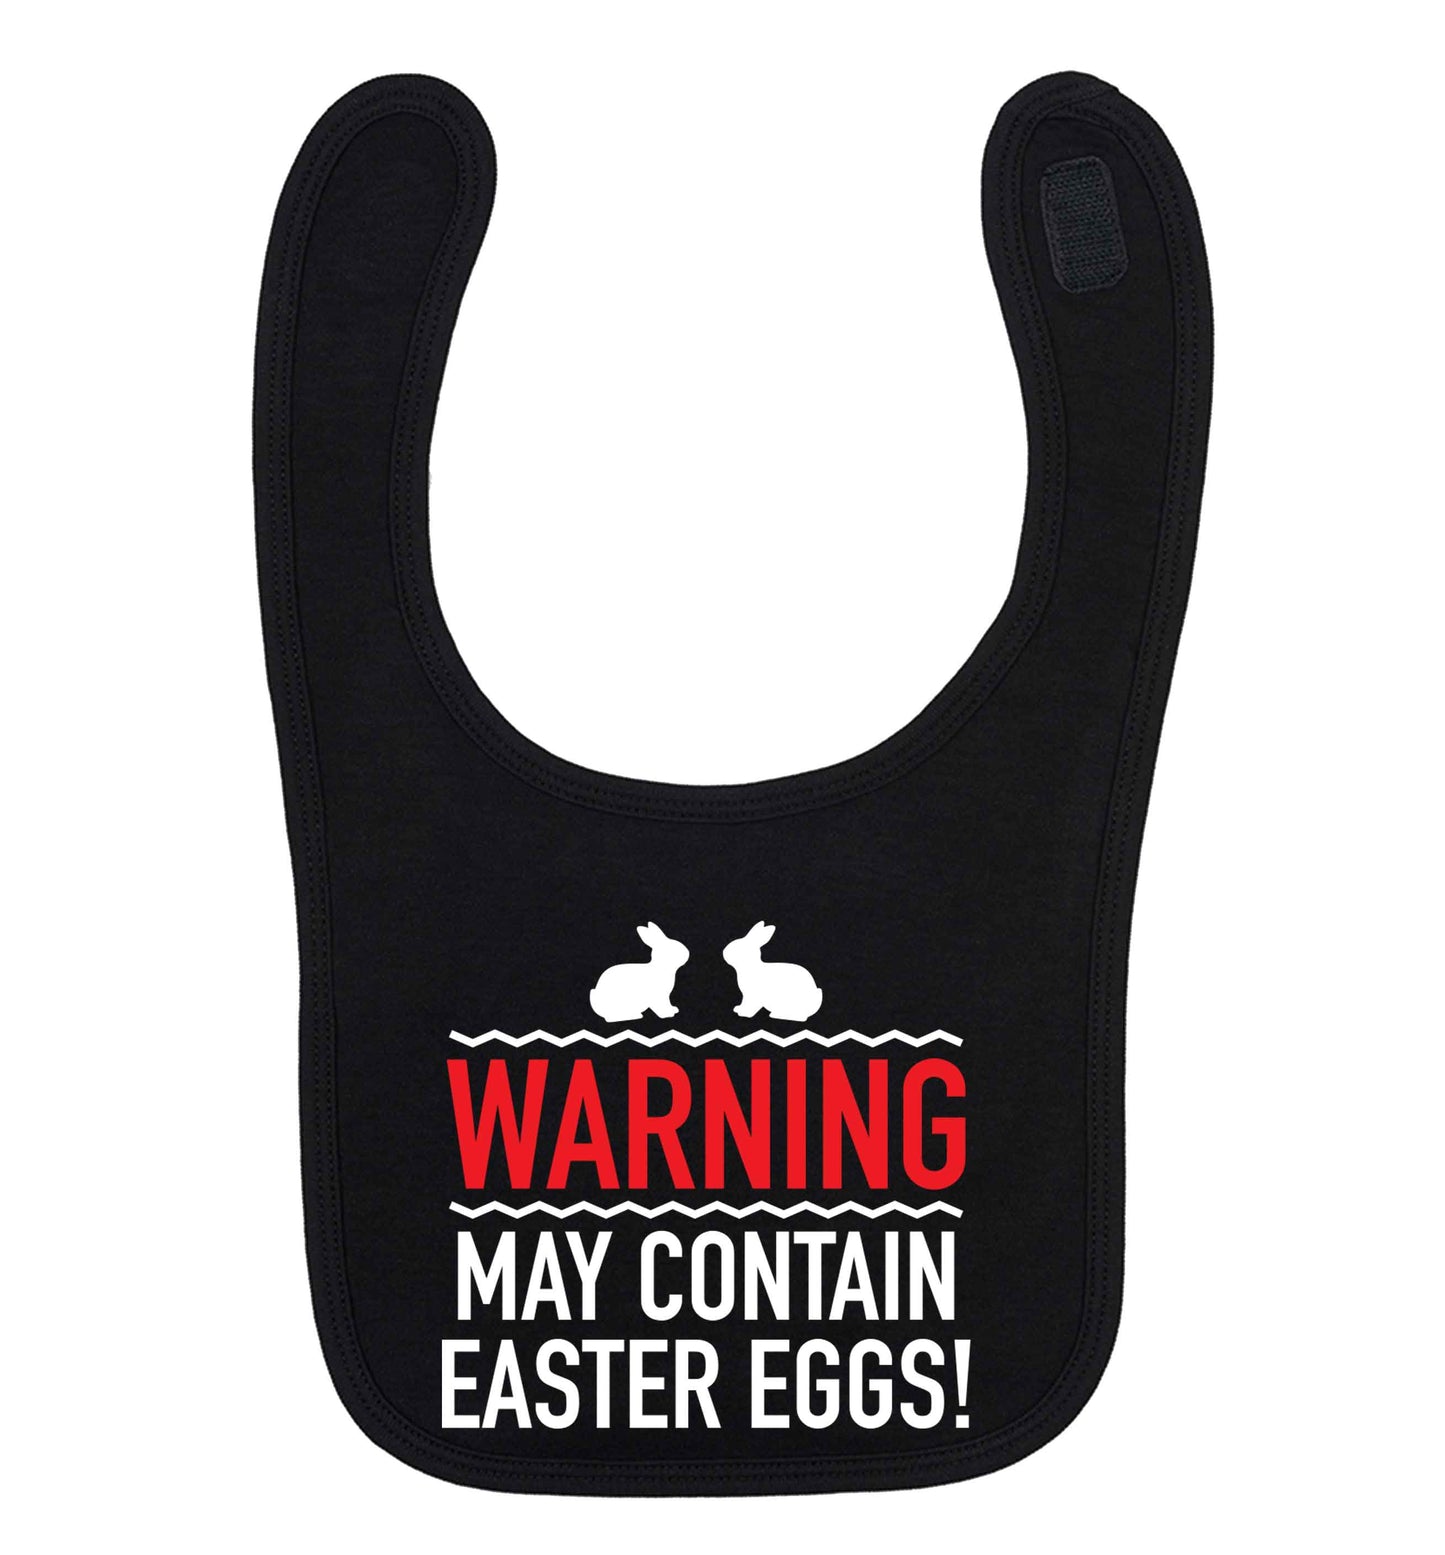 Warning may contain Easter eggs black baby bib